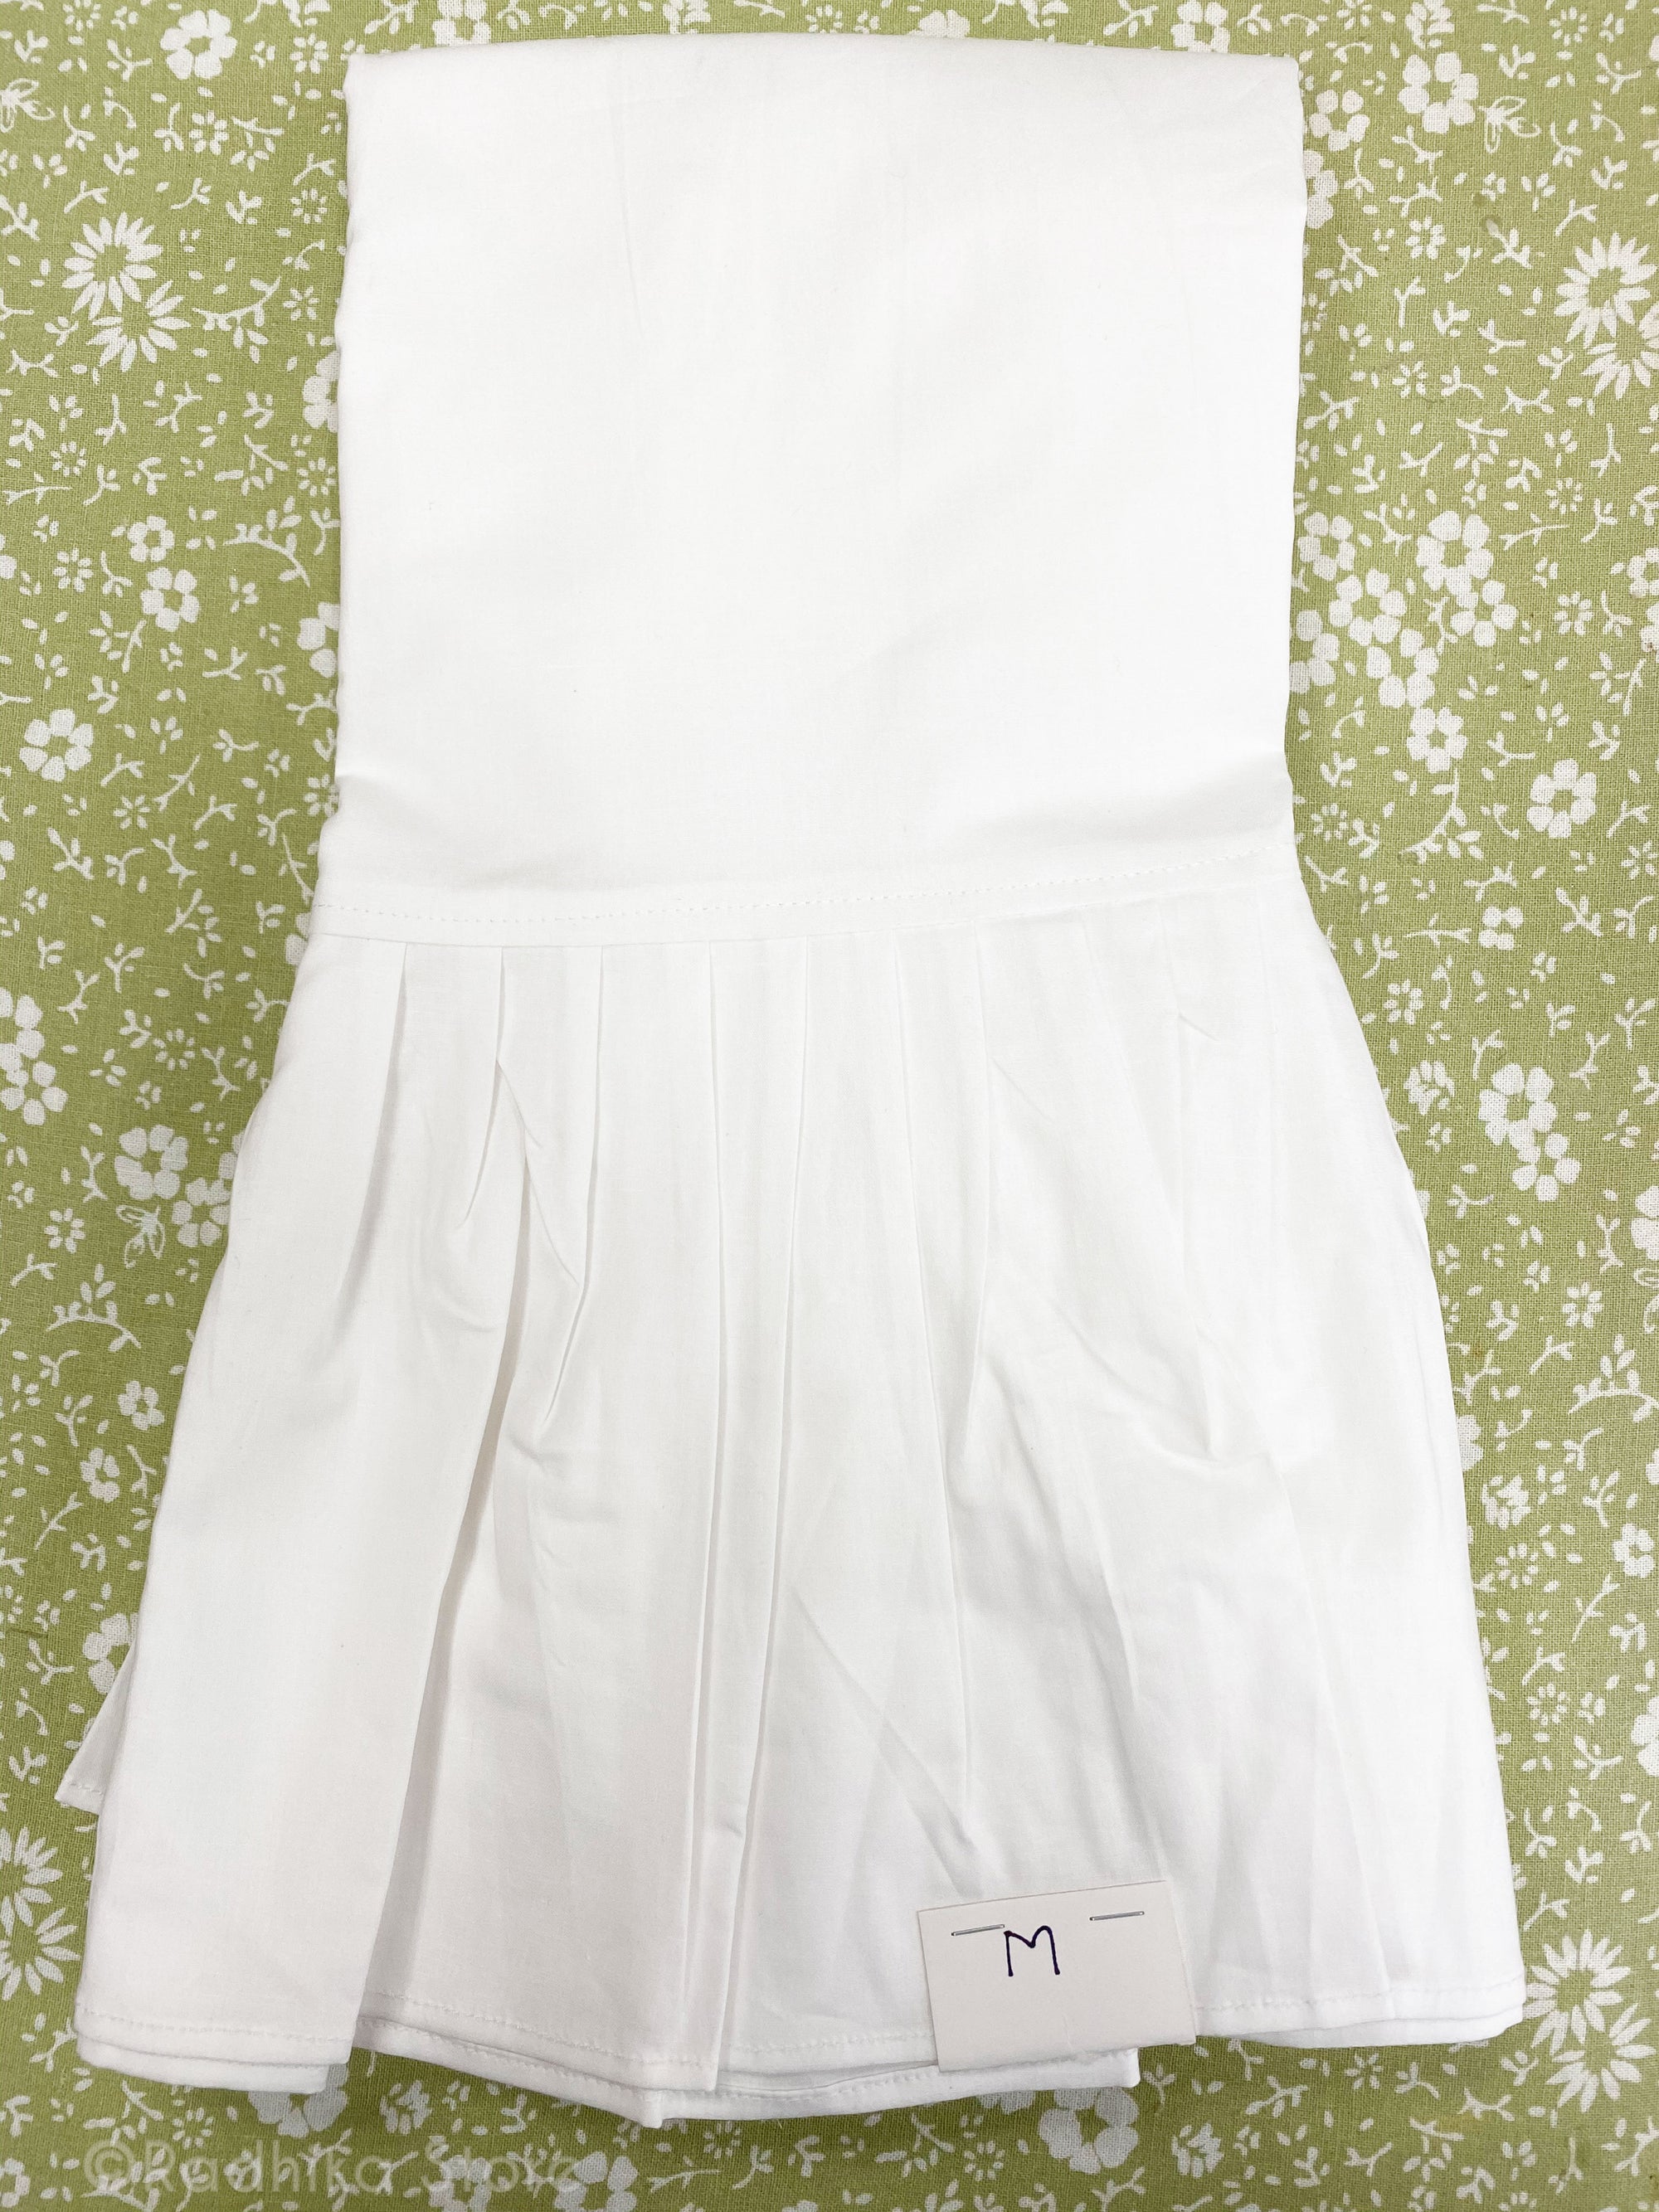 White Cotton Petticoat/ Slip - S, M, L, Xl